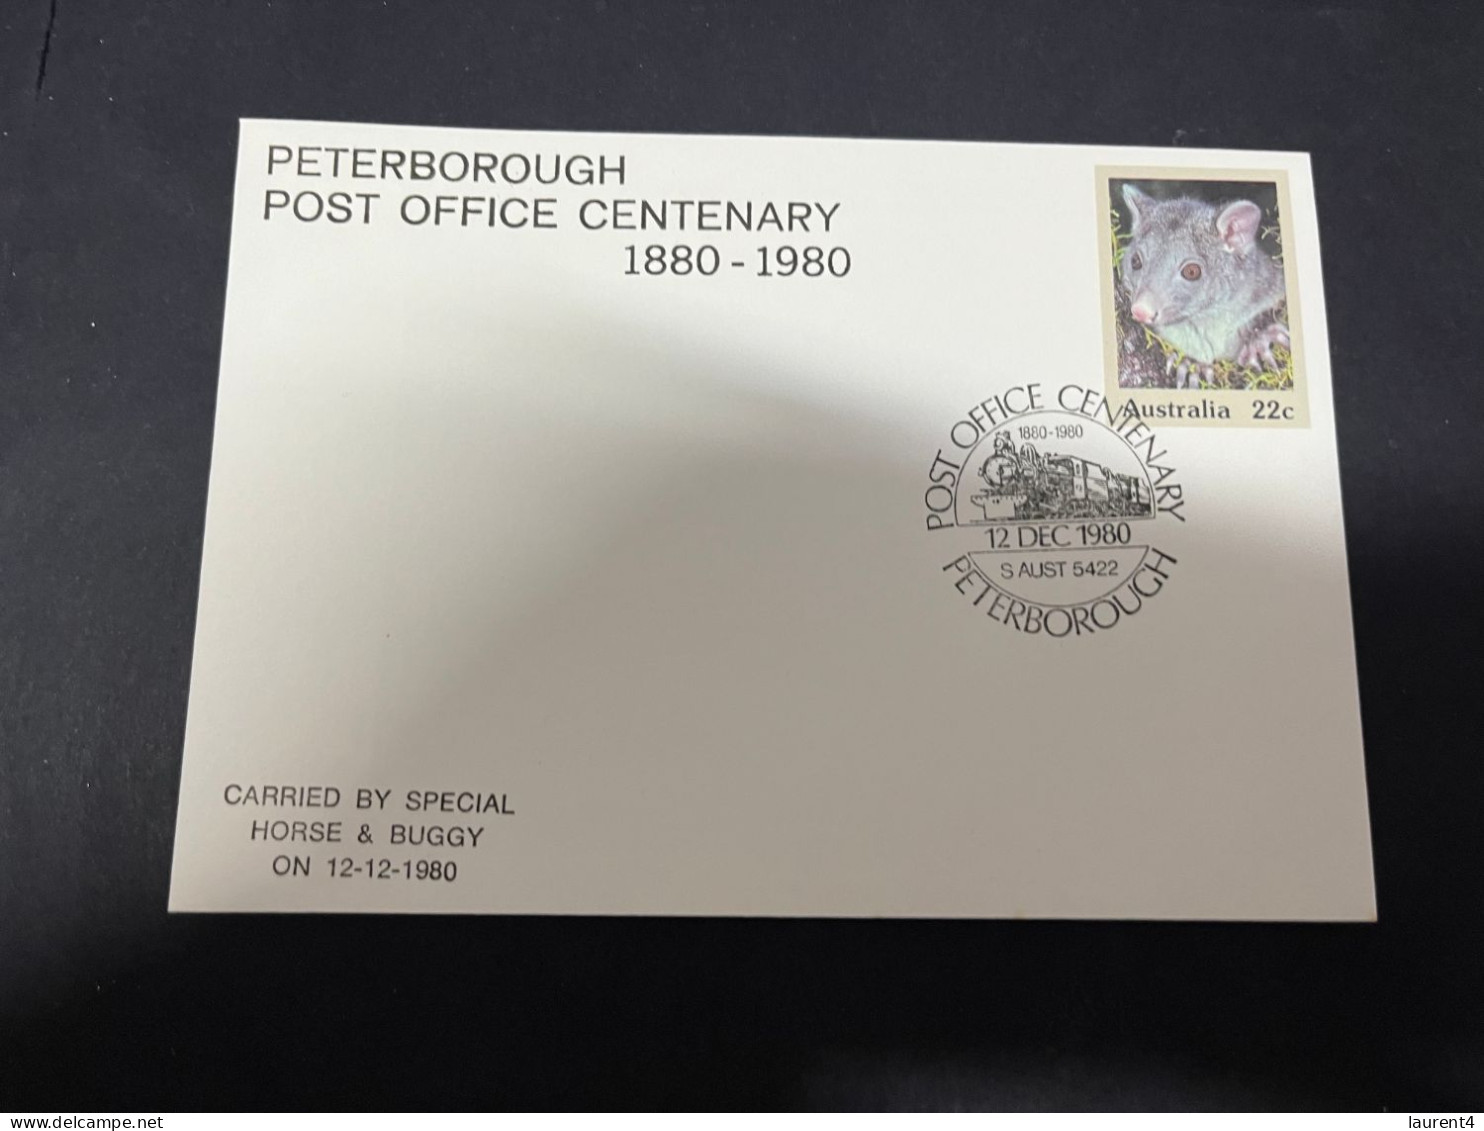 30-4-2023 (3 Z 29) Australia FDC (1 Cover) 1980 - Peterborough Post Office Centenary (Brushtail Possum) - Ersttagsbelege (FDC)